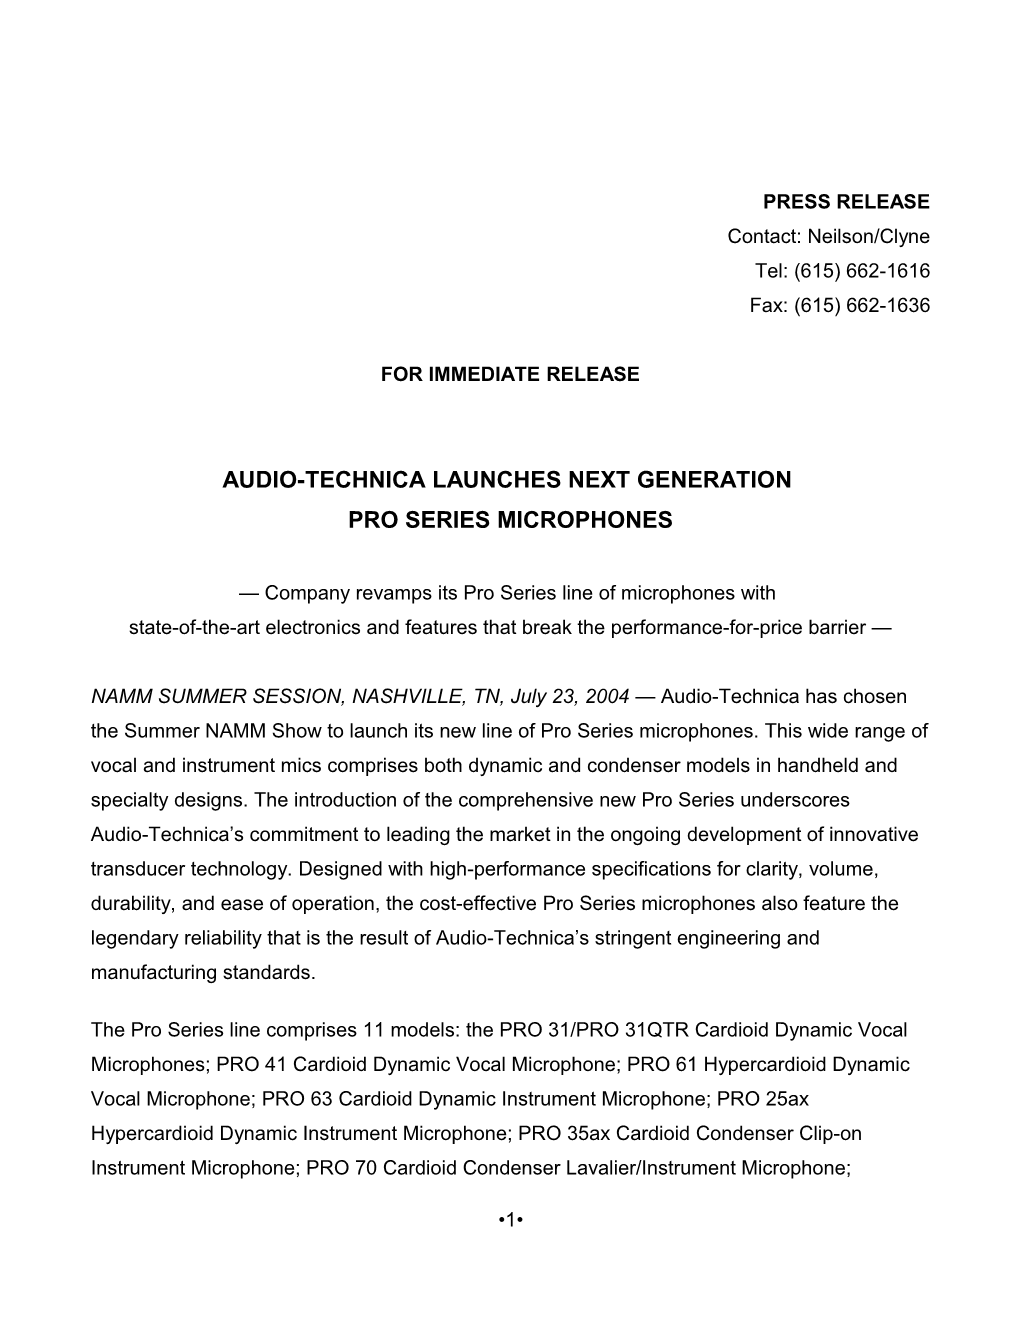 Audio-Technica Launches Next Generation